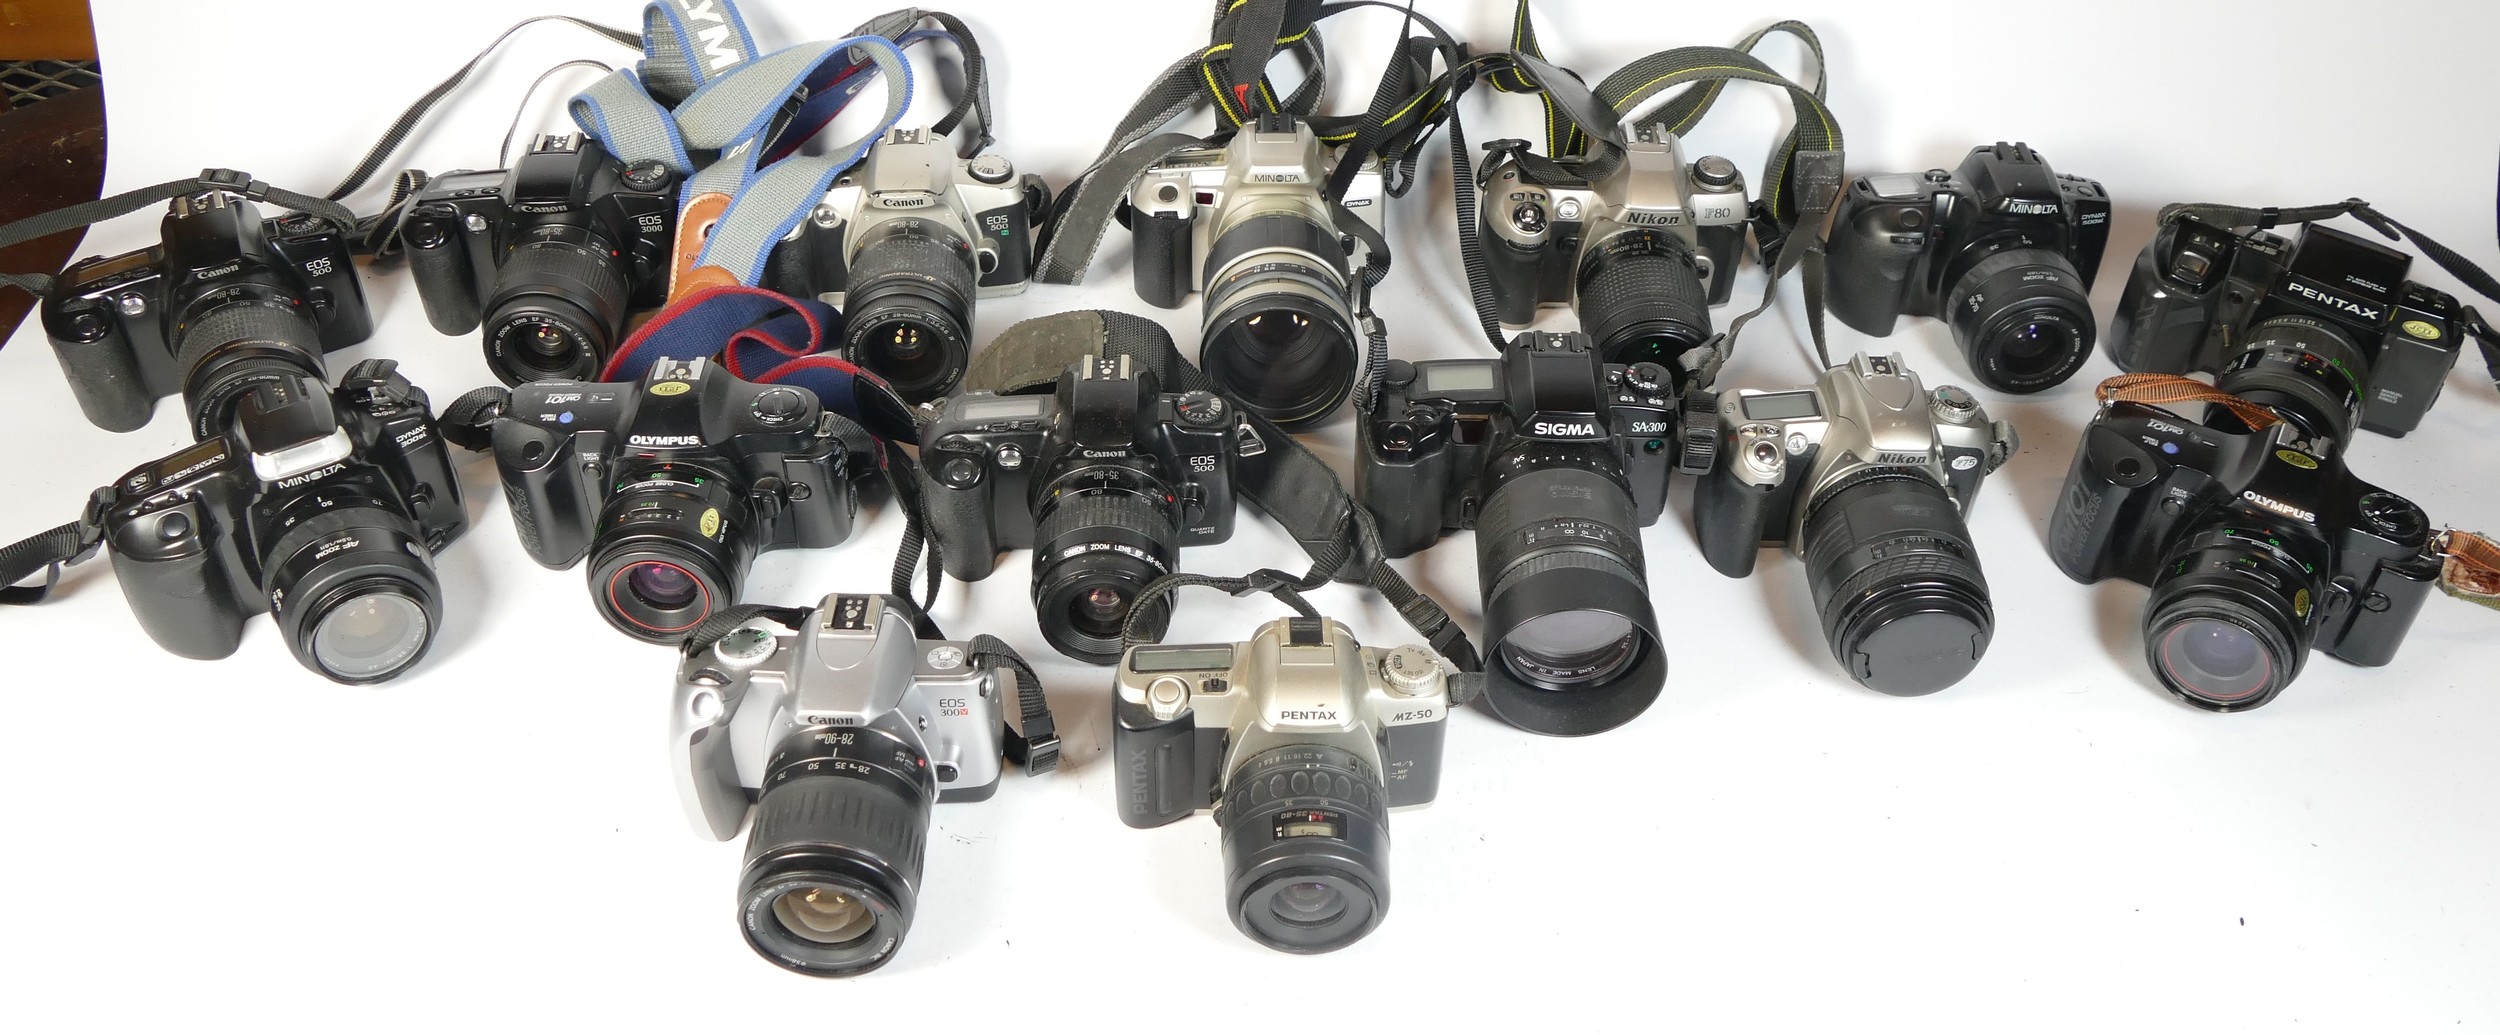 Twenty five SLR vintage film cameras to include a Minolta 404si, a Canon EOS 3000, an Olympus